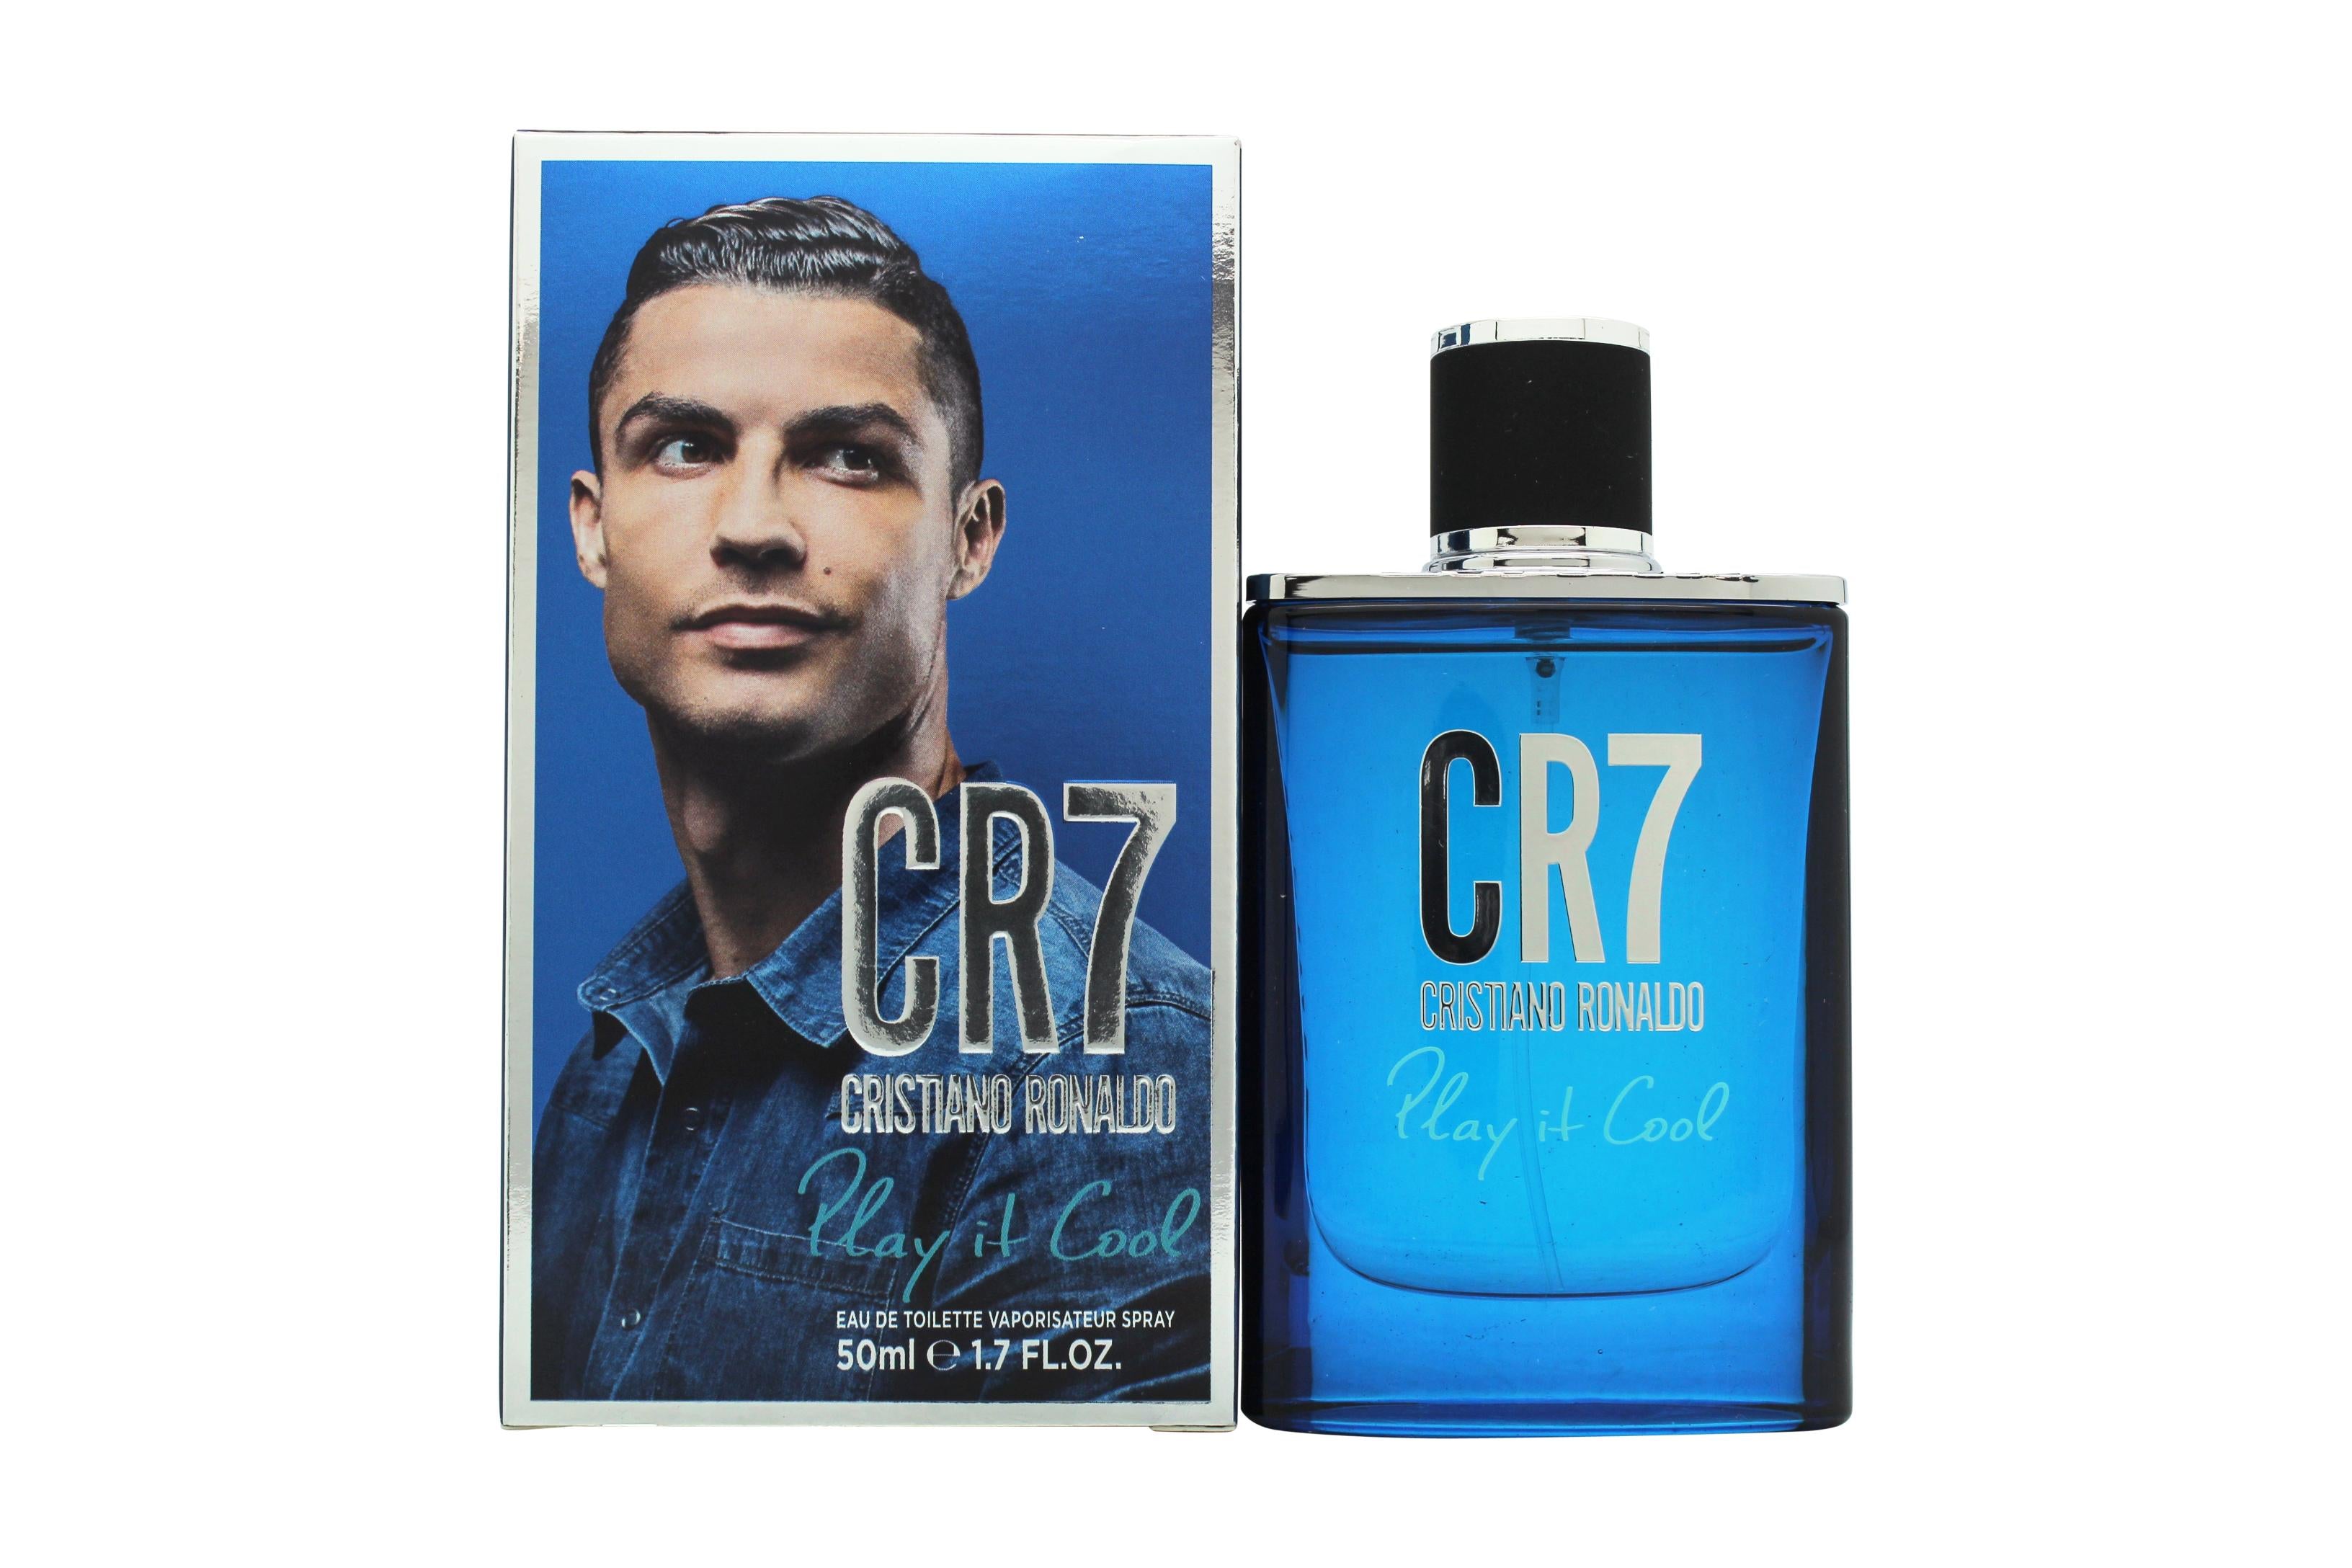 View Cristiano Ronaldo CR7 Play It Cool Eau de Toilette 50ml Spray information